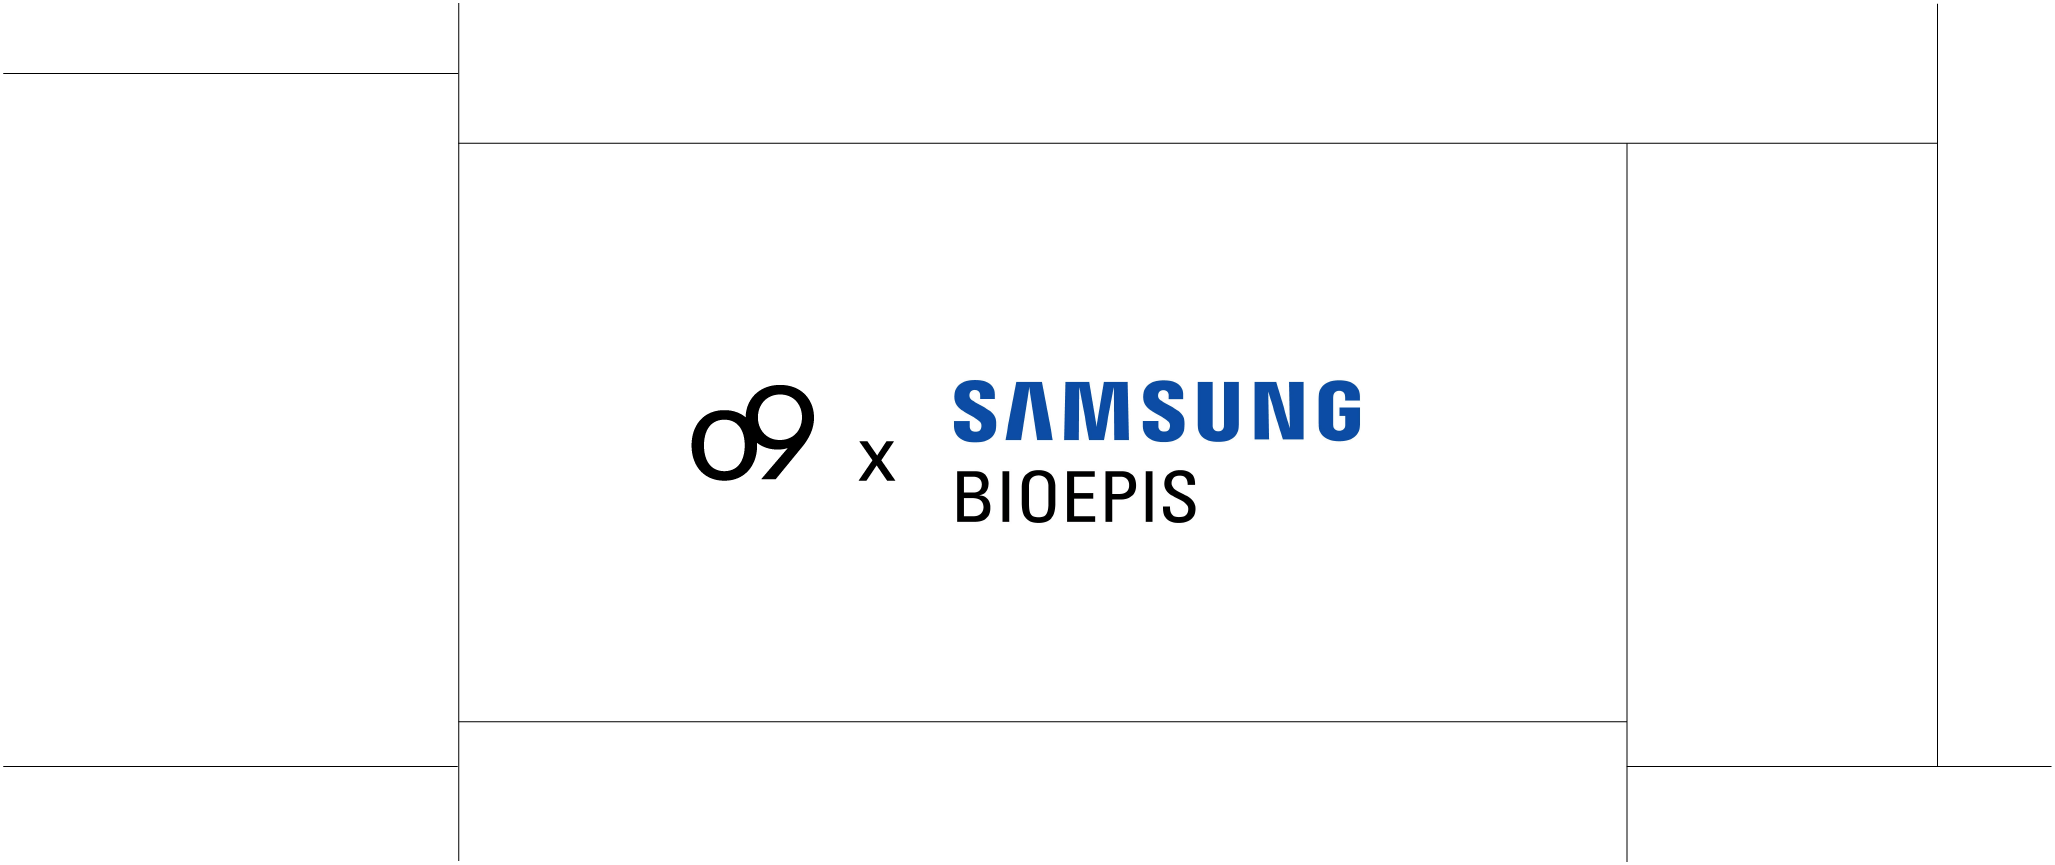 o9 Solutions to supply AI-powered IBP platform to Samsung Bioepis